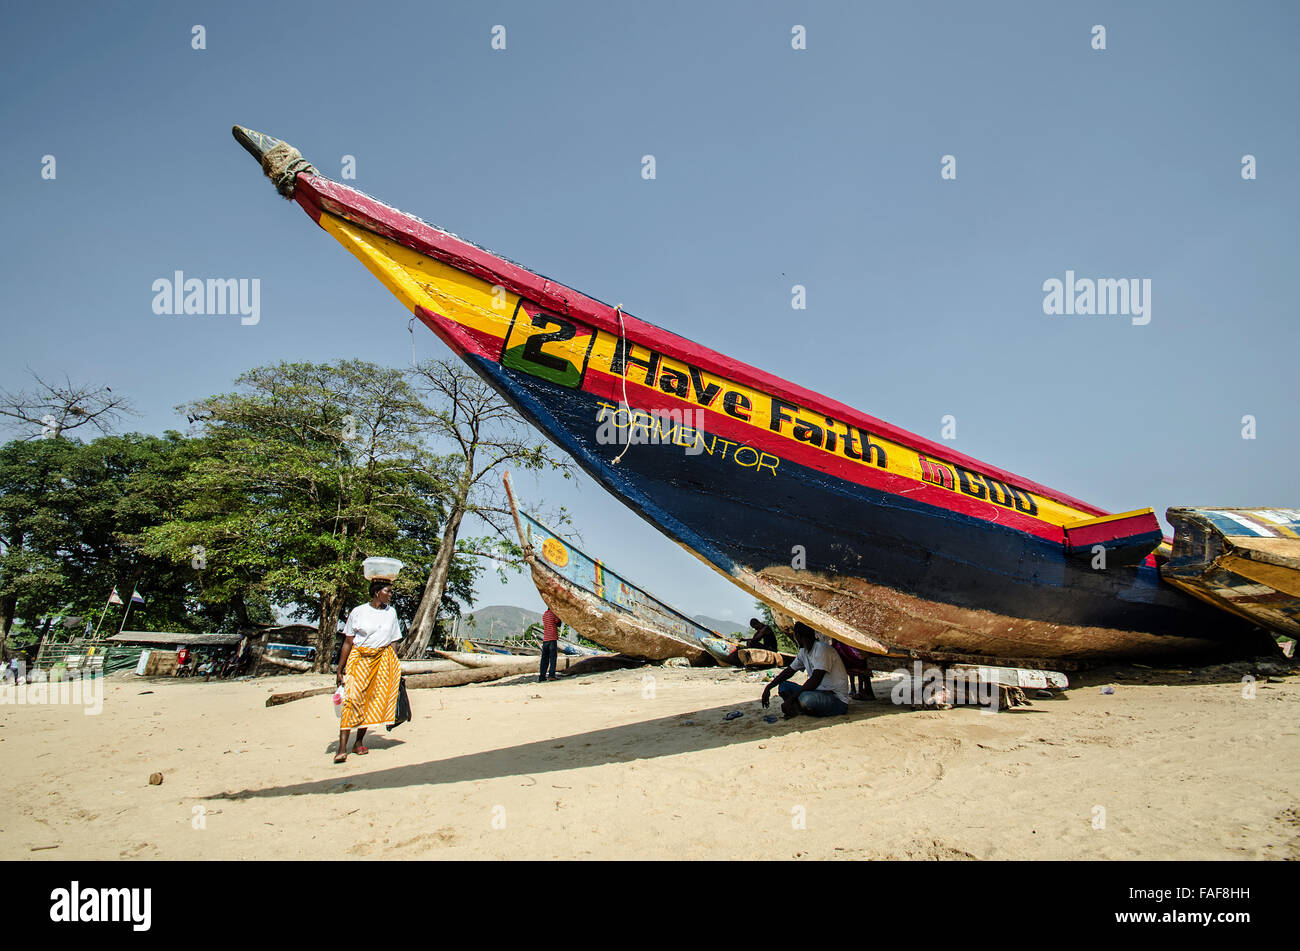 Boat on a beach in Goderich, Sierra Leone Stock Photo